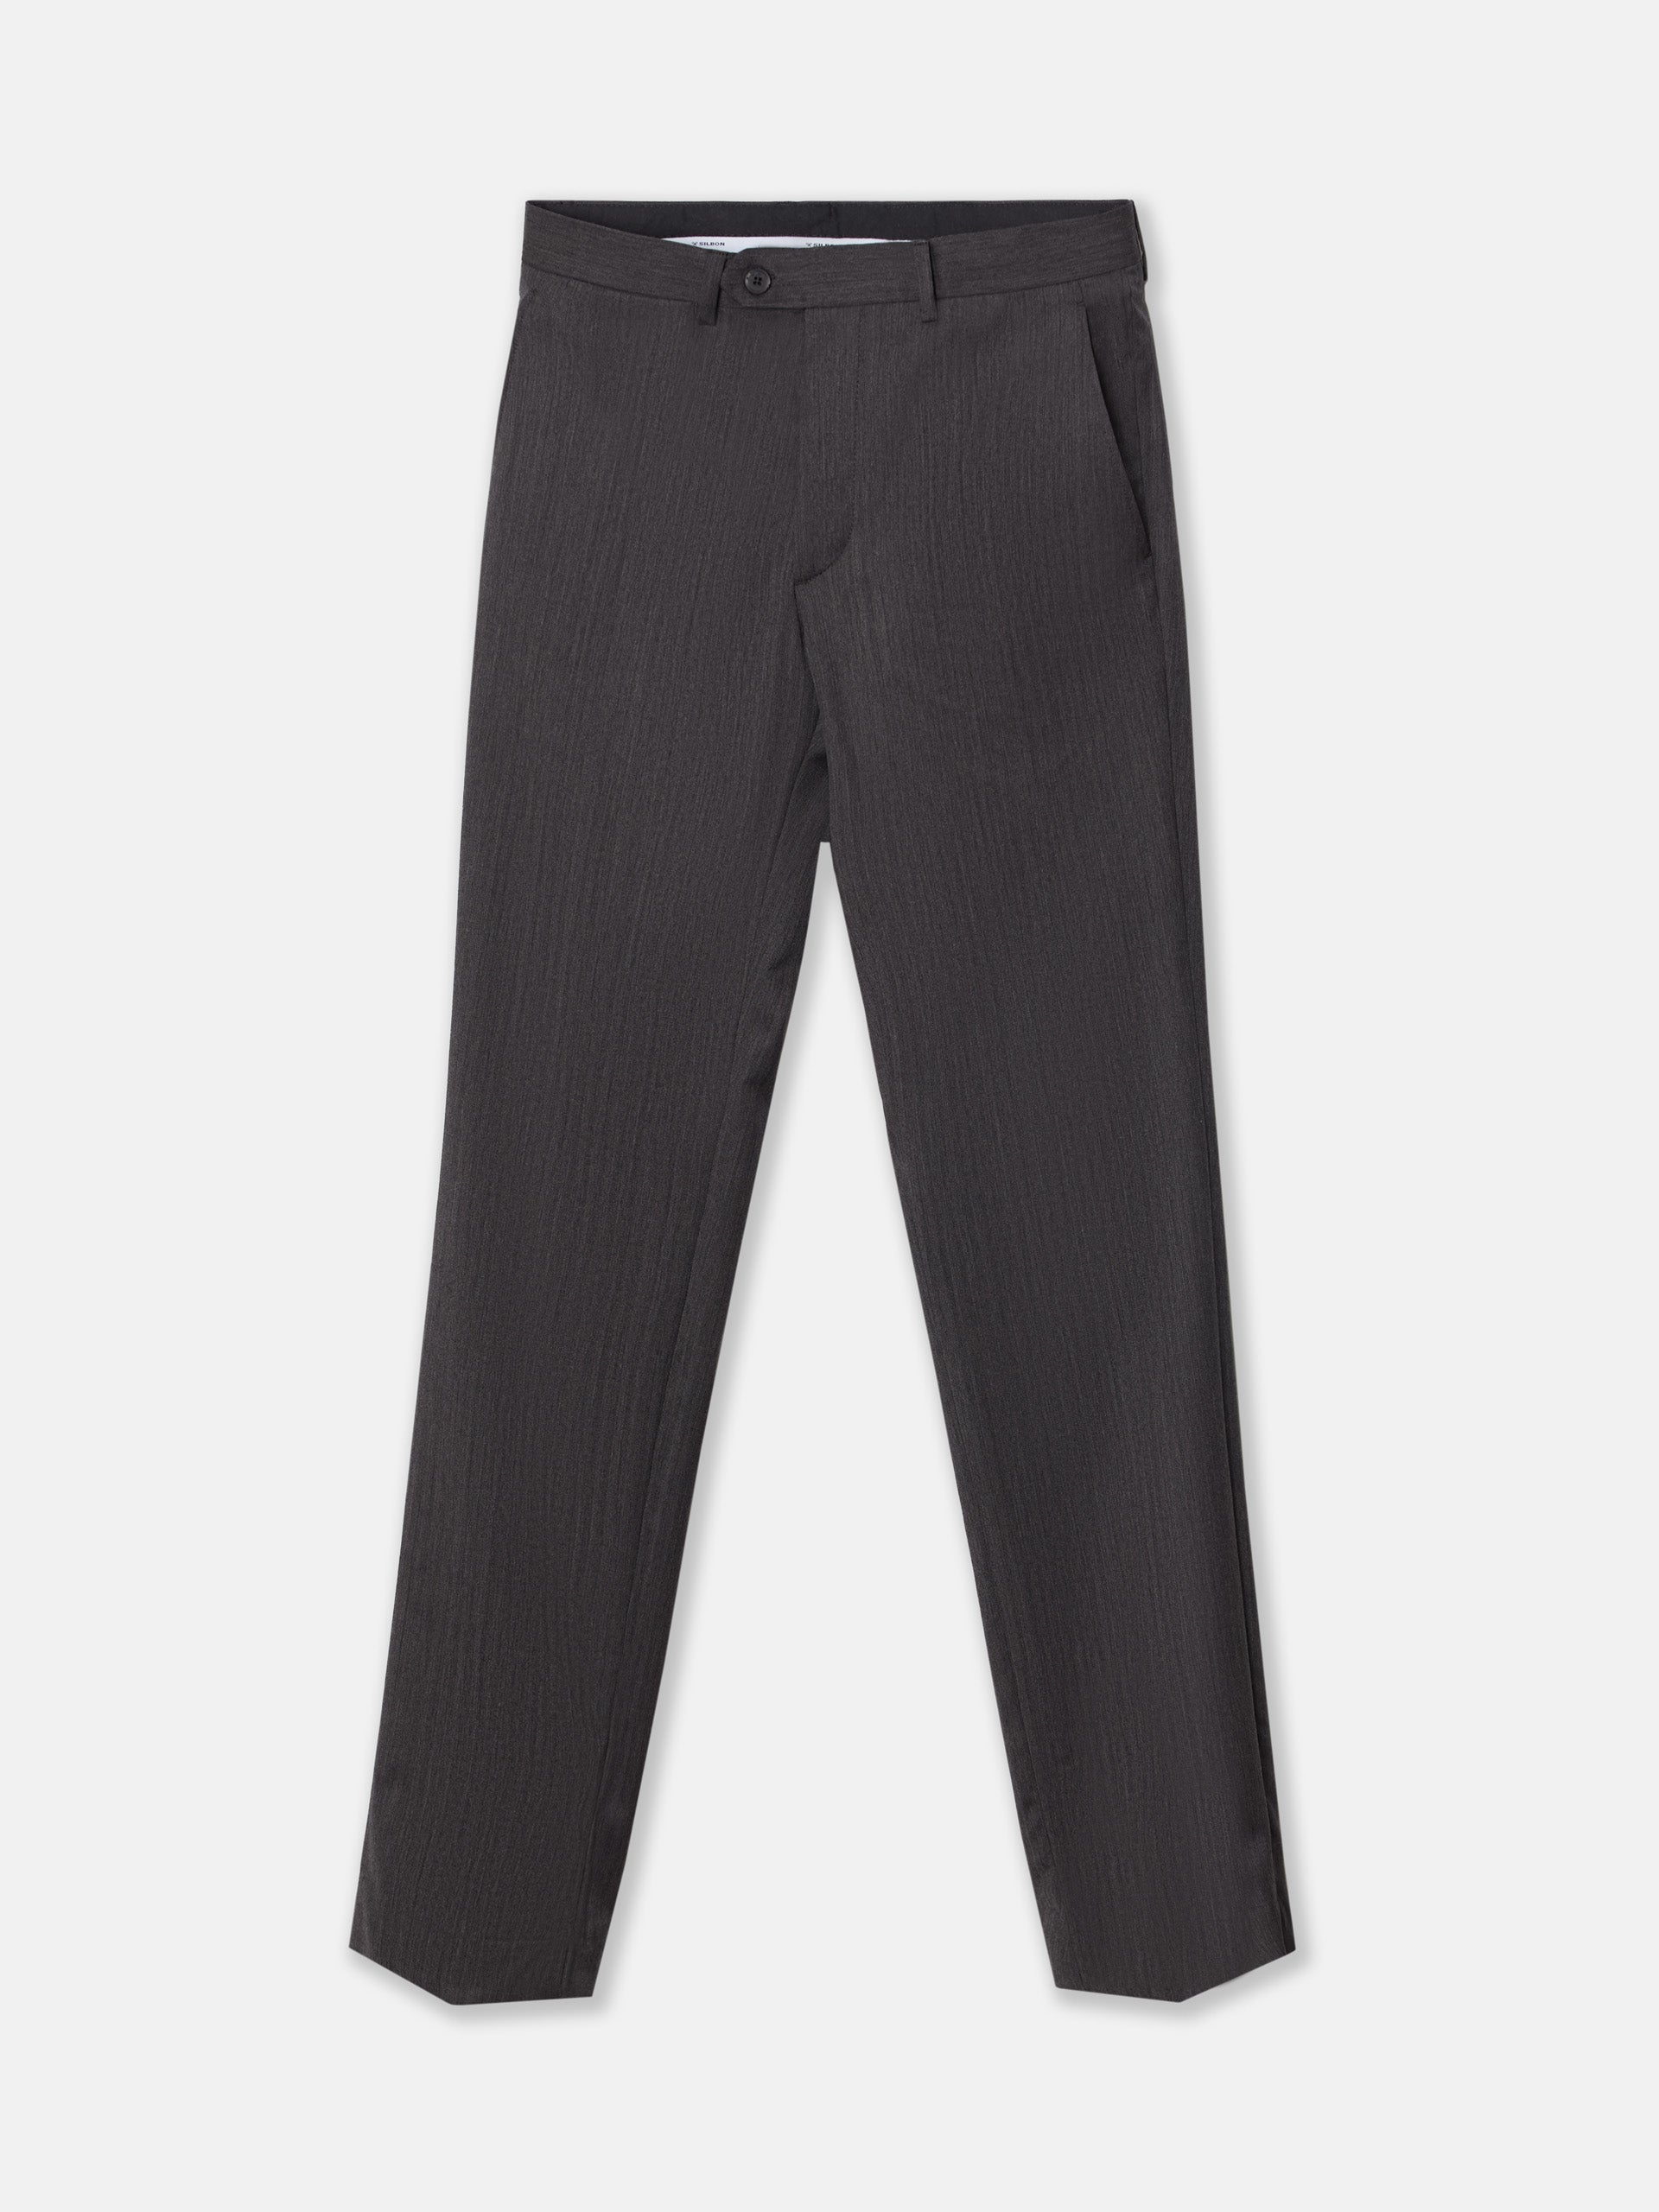 Pantalon traje clasico espiga gris